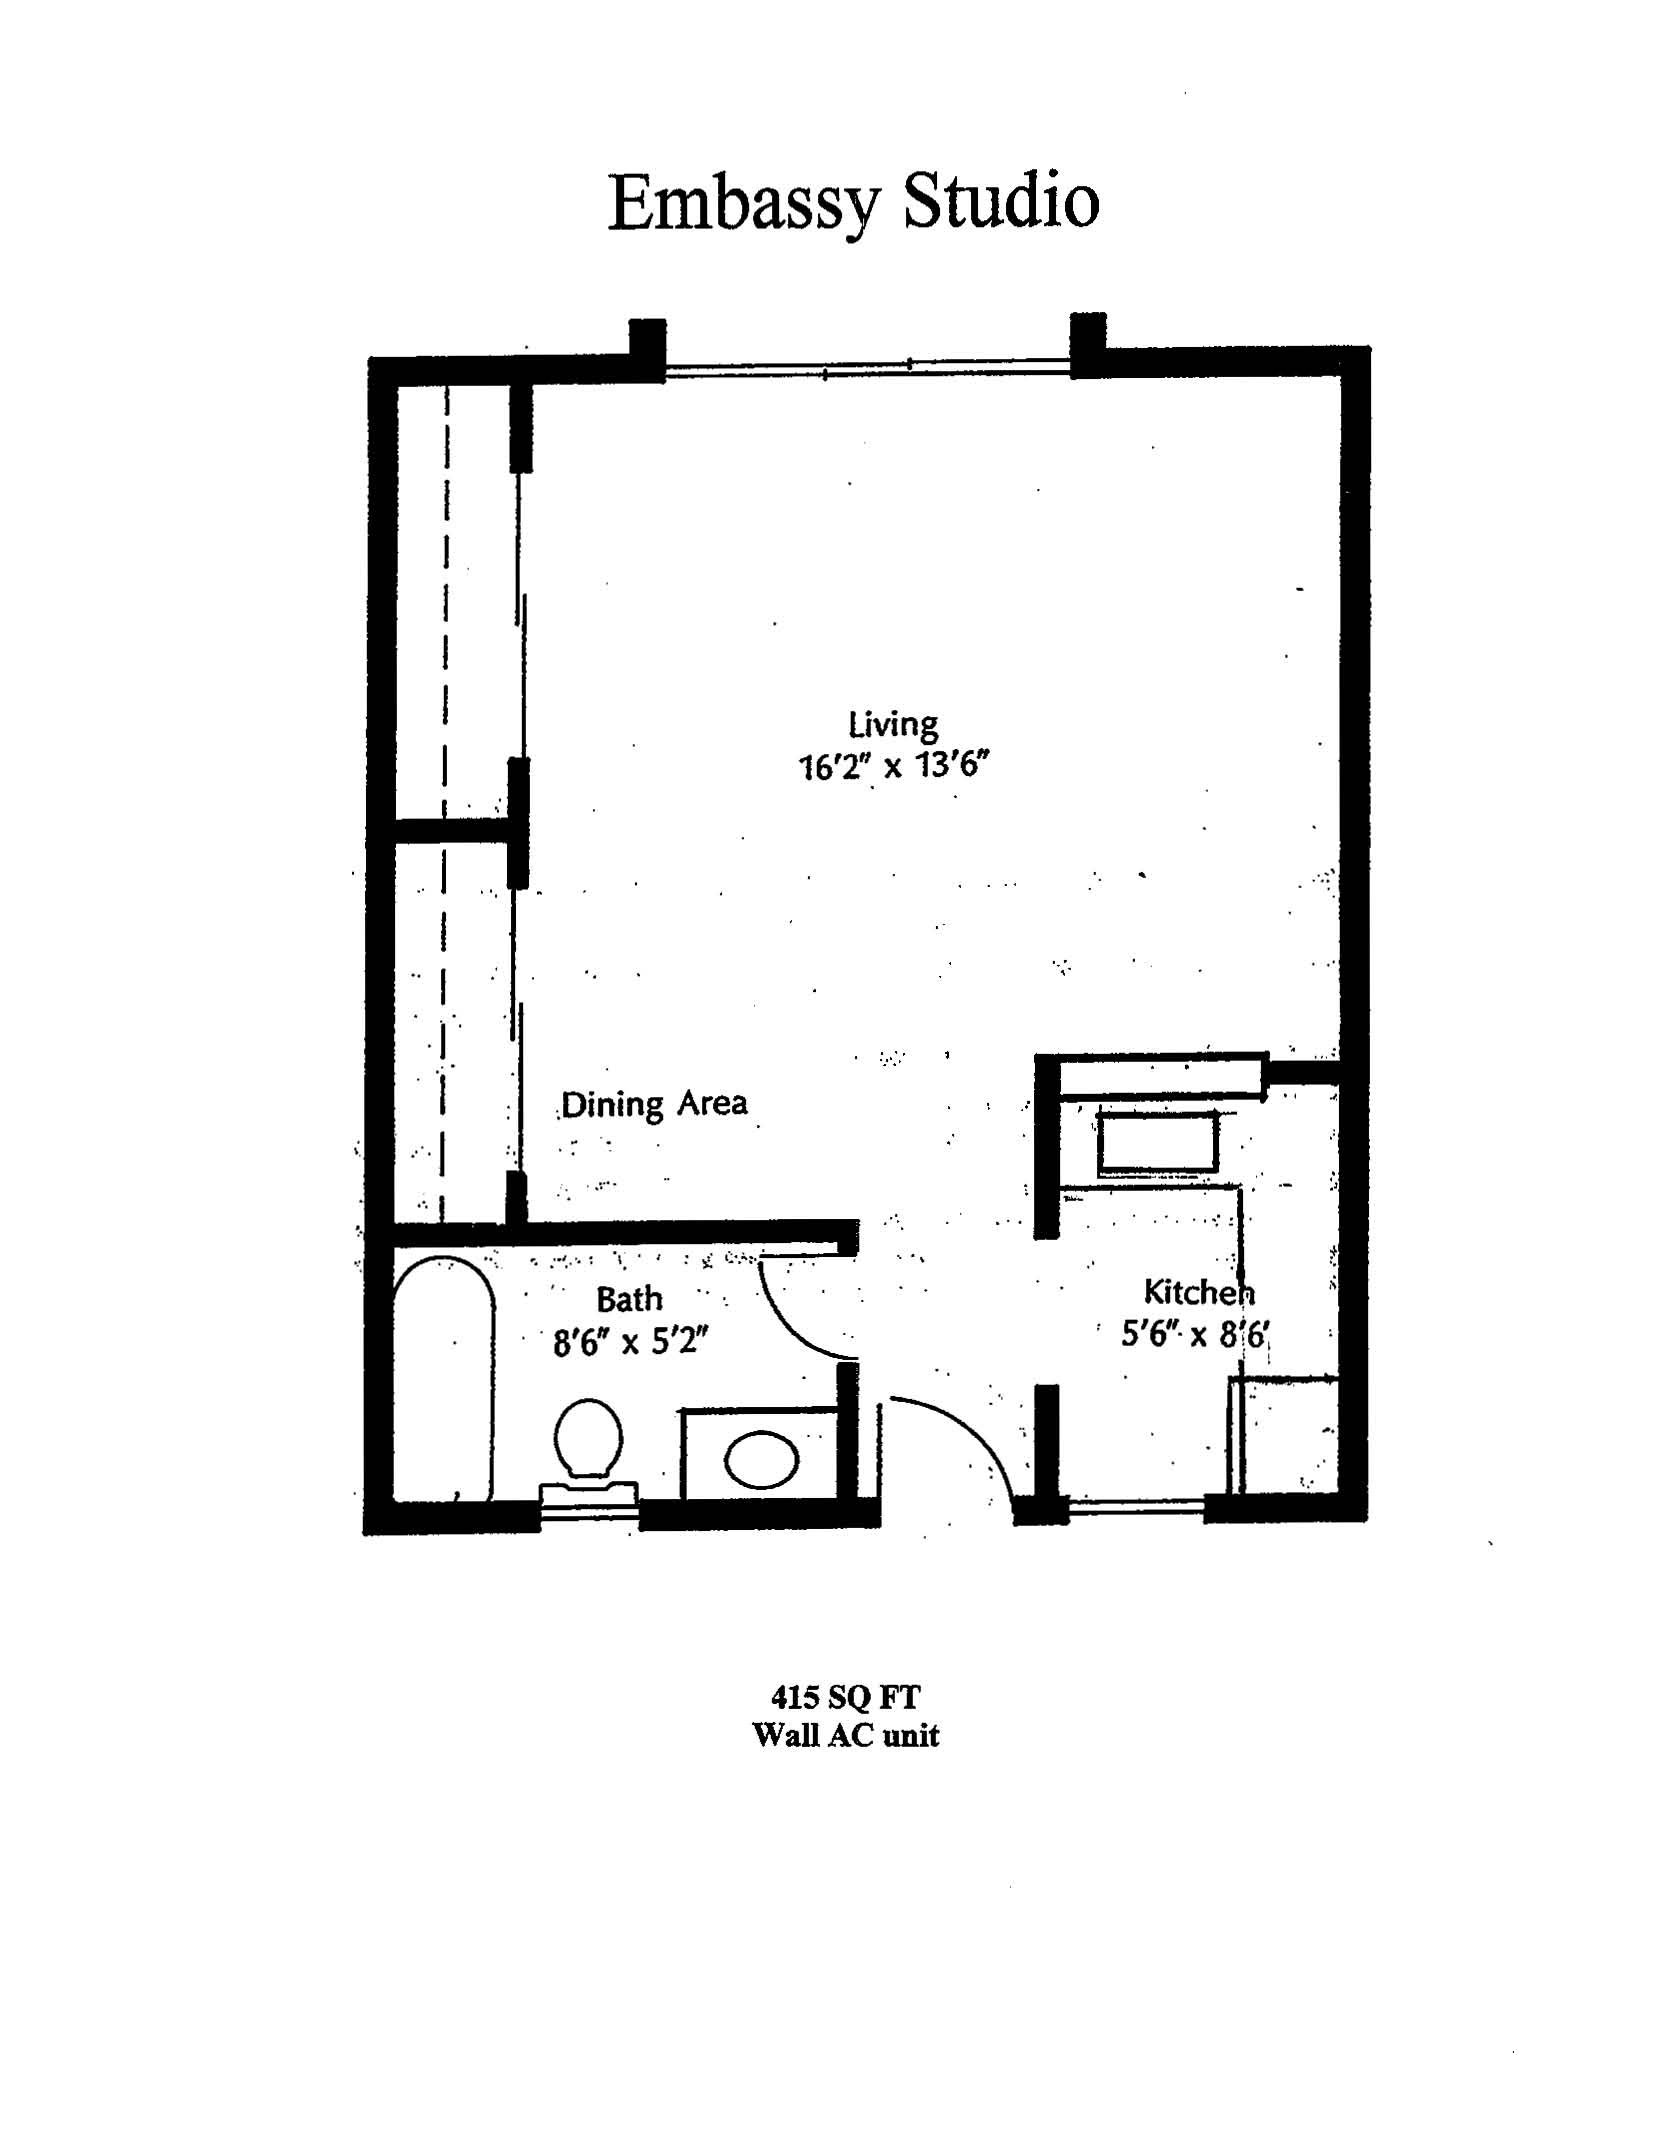 WestShore Apartments/Embassy Apartments - Floorplan - EMBASSY - Studio